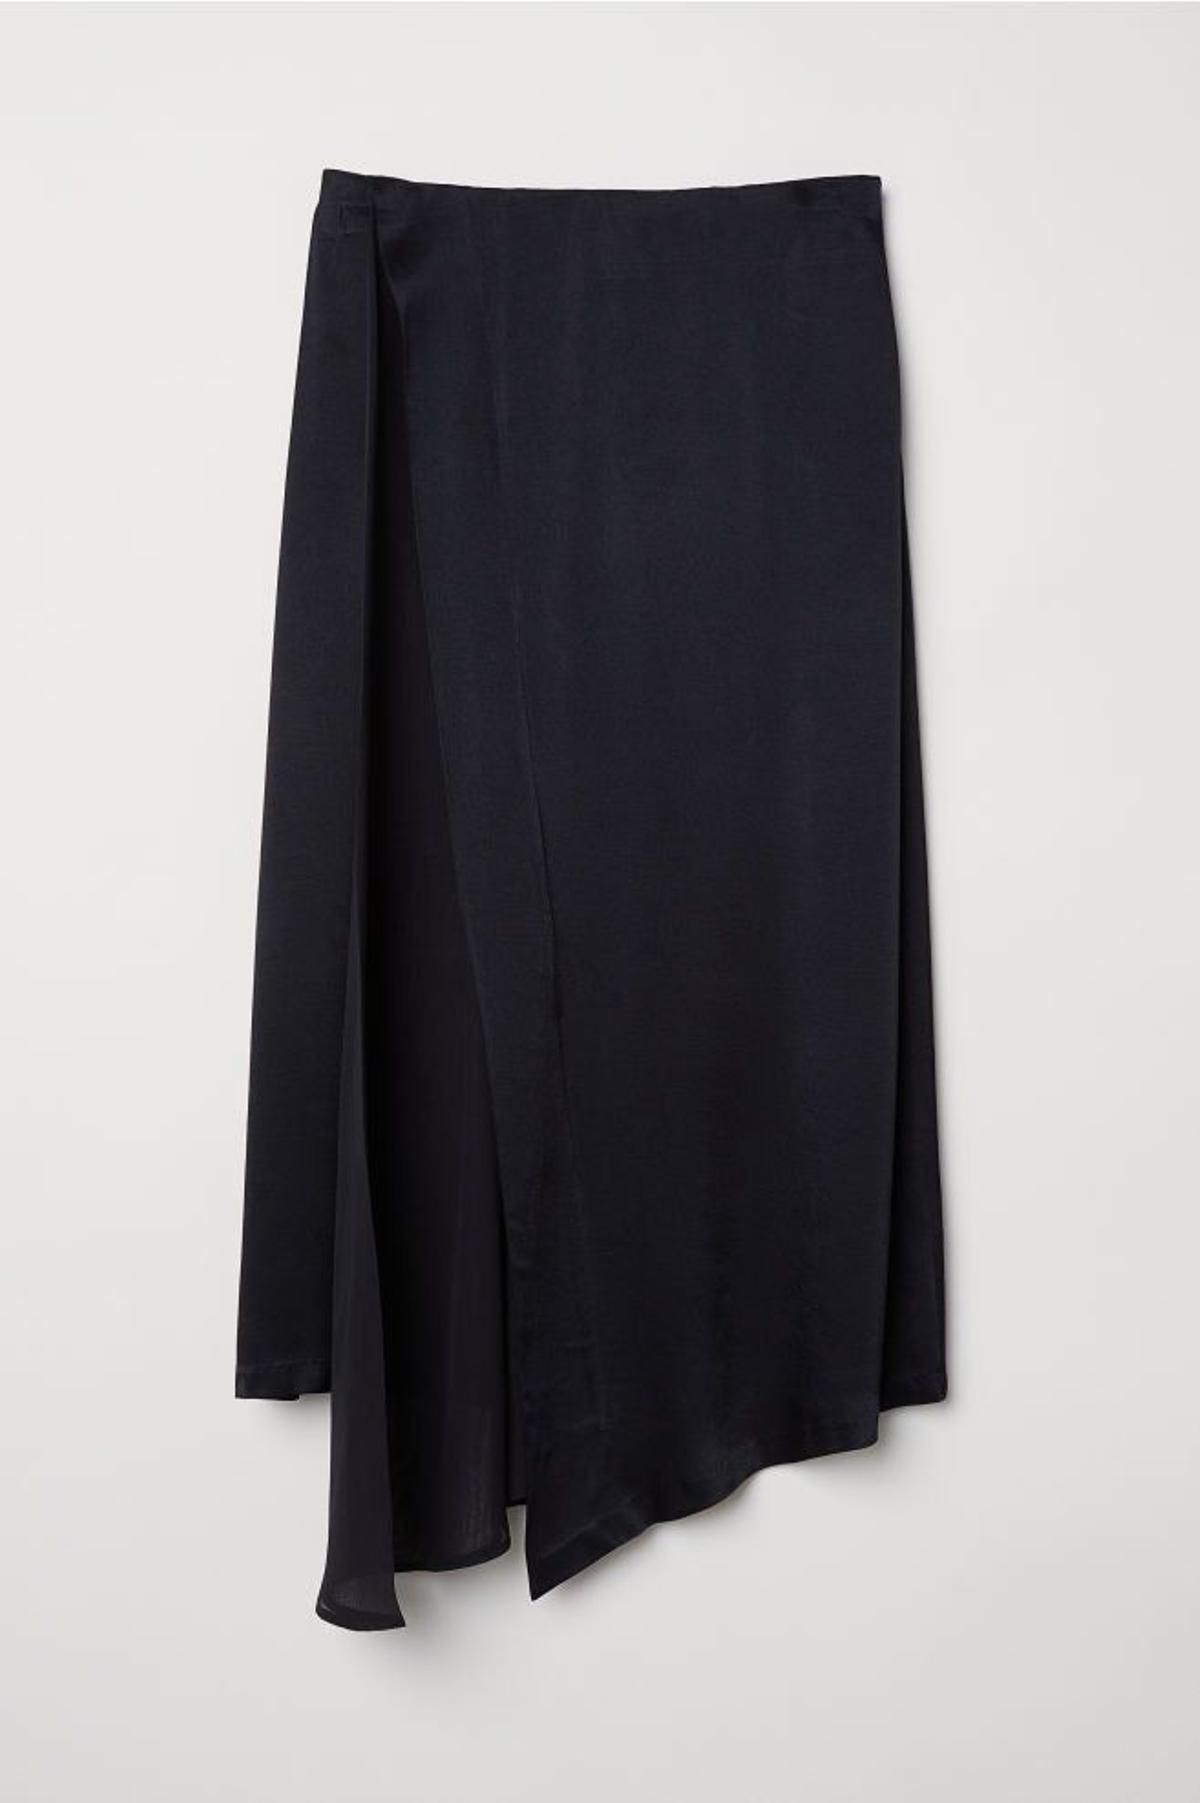 Falda negra de largo midi de H&amp;M. (Precio: 49, 99 euros)